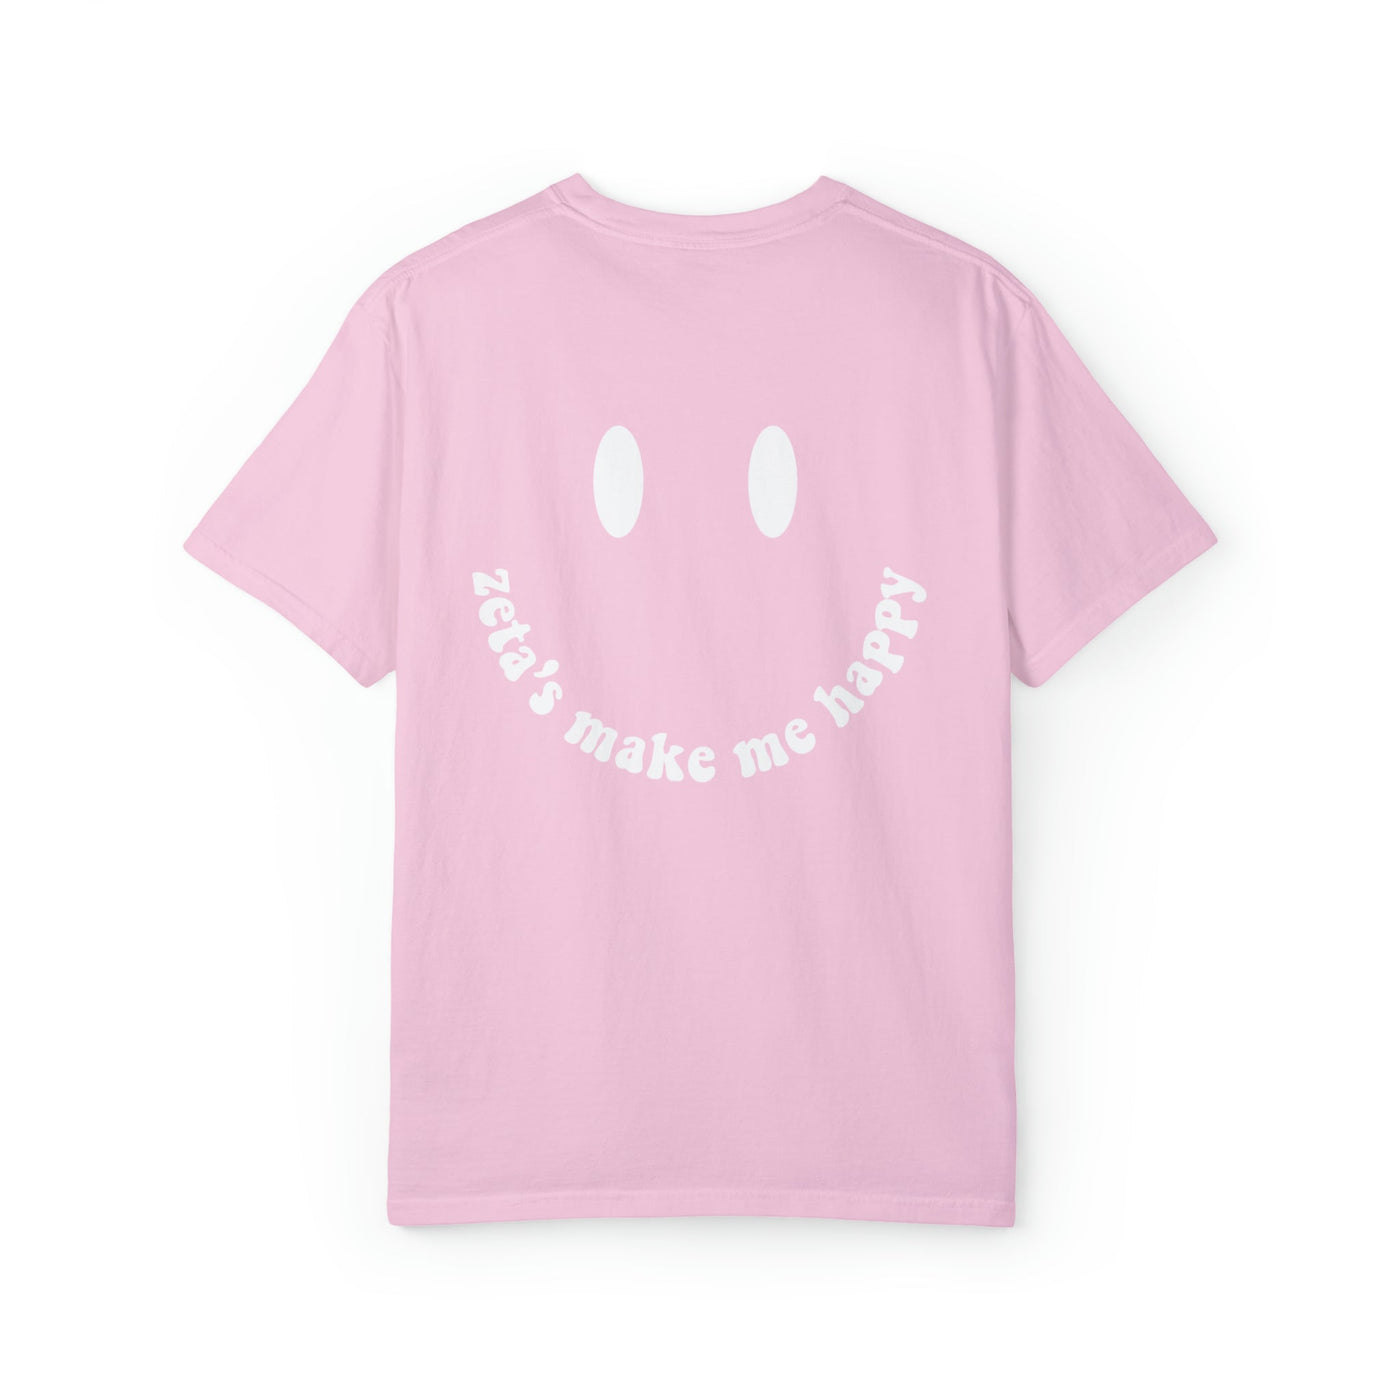 Zeta Tau Alpha's Make Me Happy Sorority Comfy T-shirt